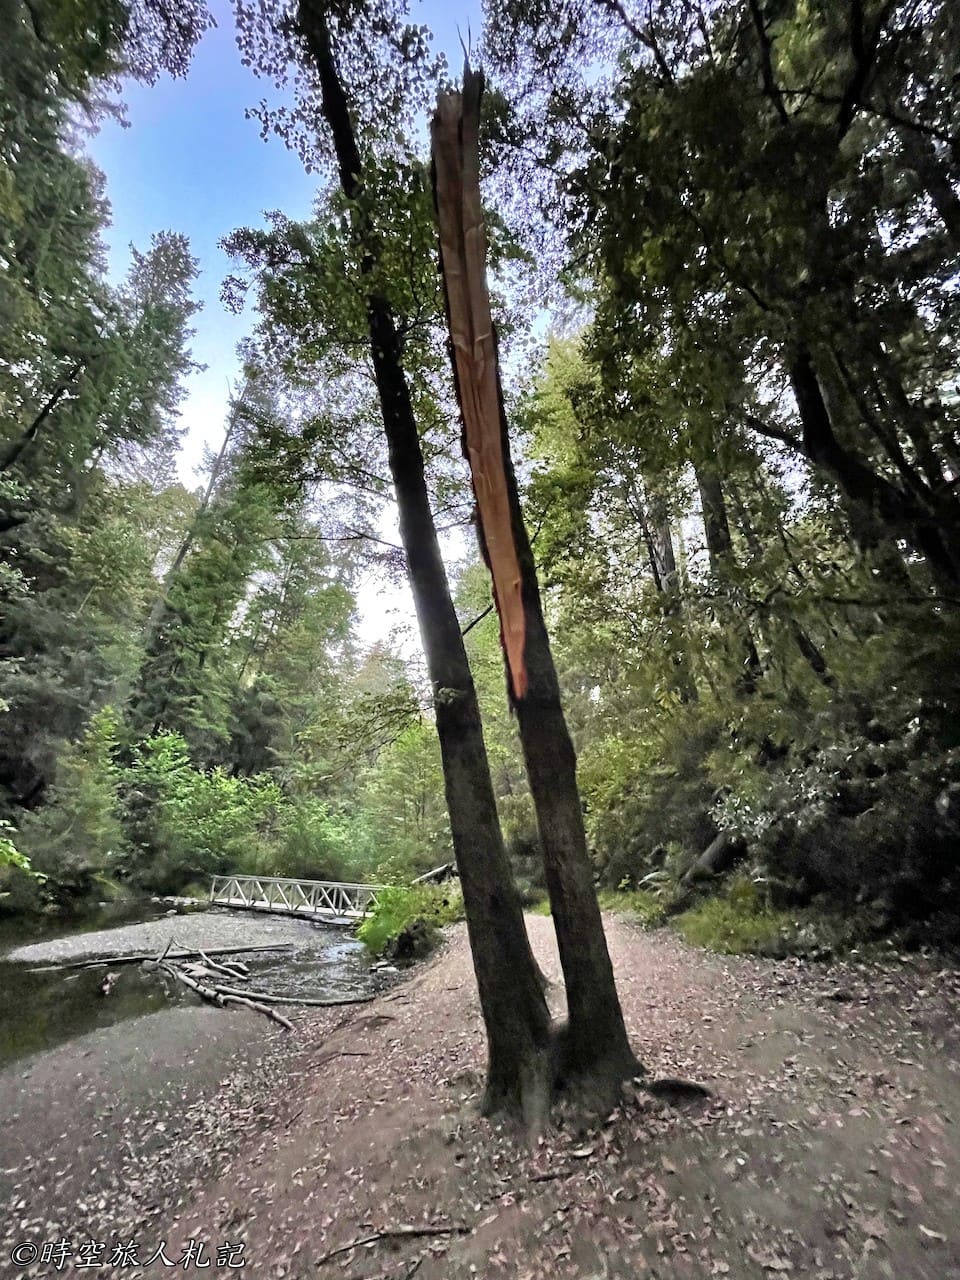 Portola redwood state park 21